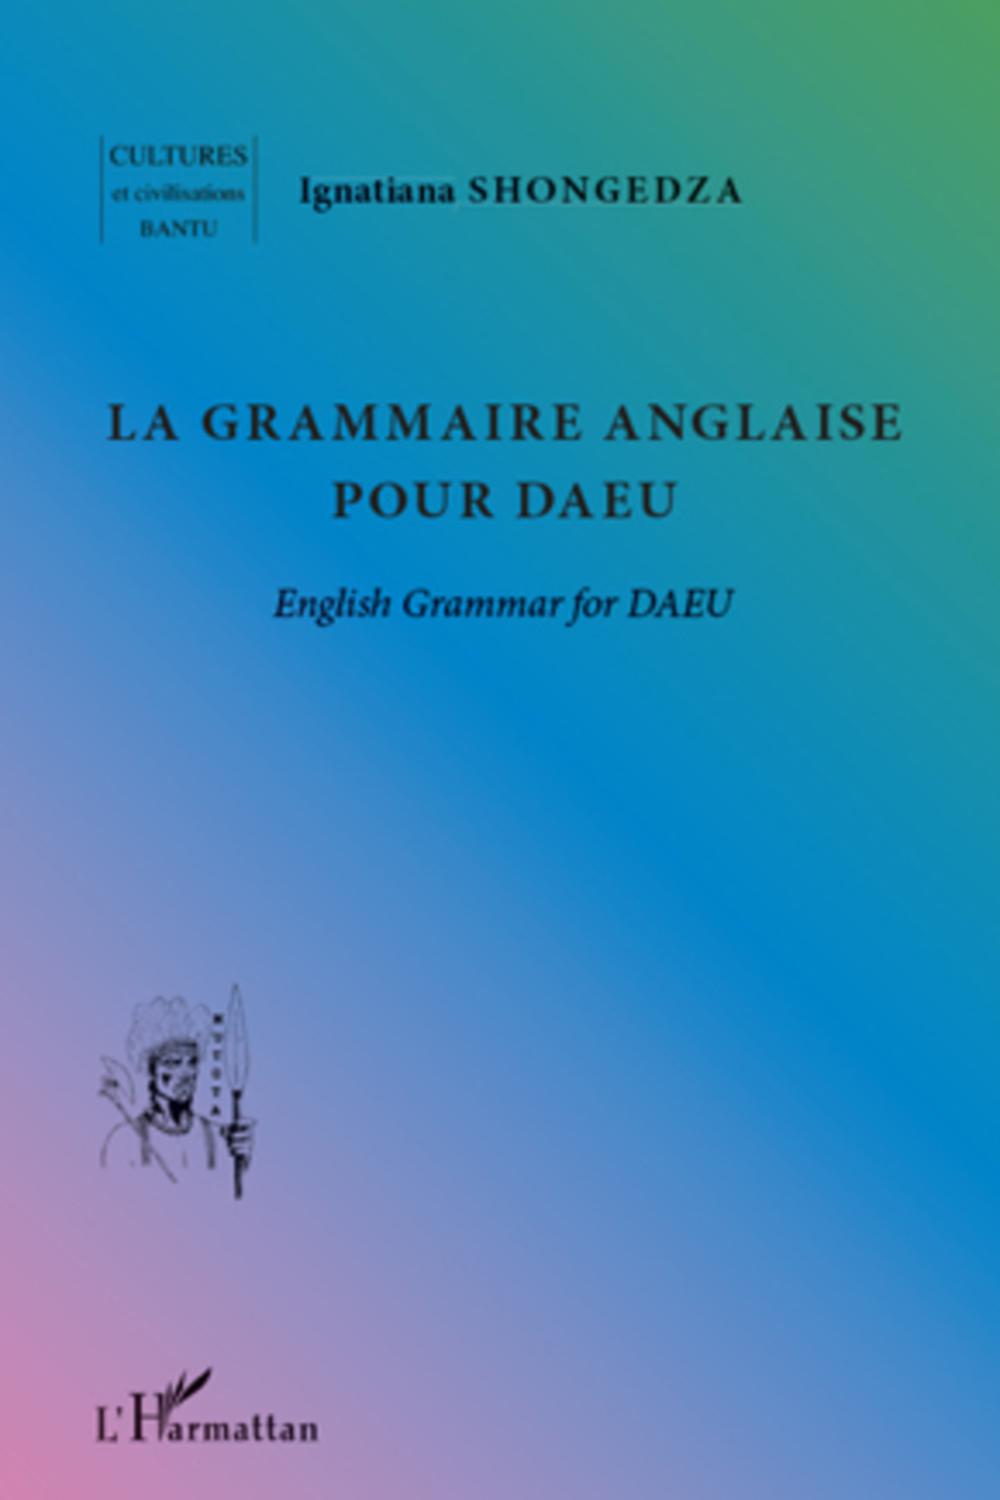 La grammaire anglaise pour DAEU - Ignatiana Shongedza